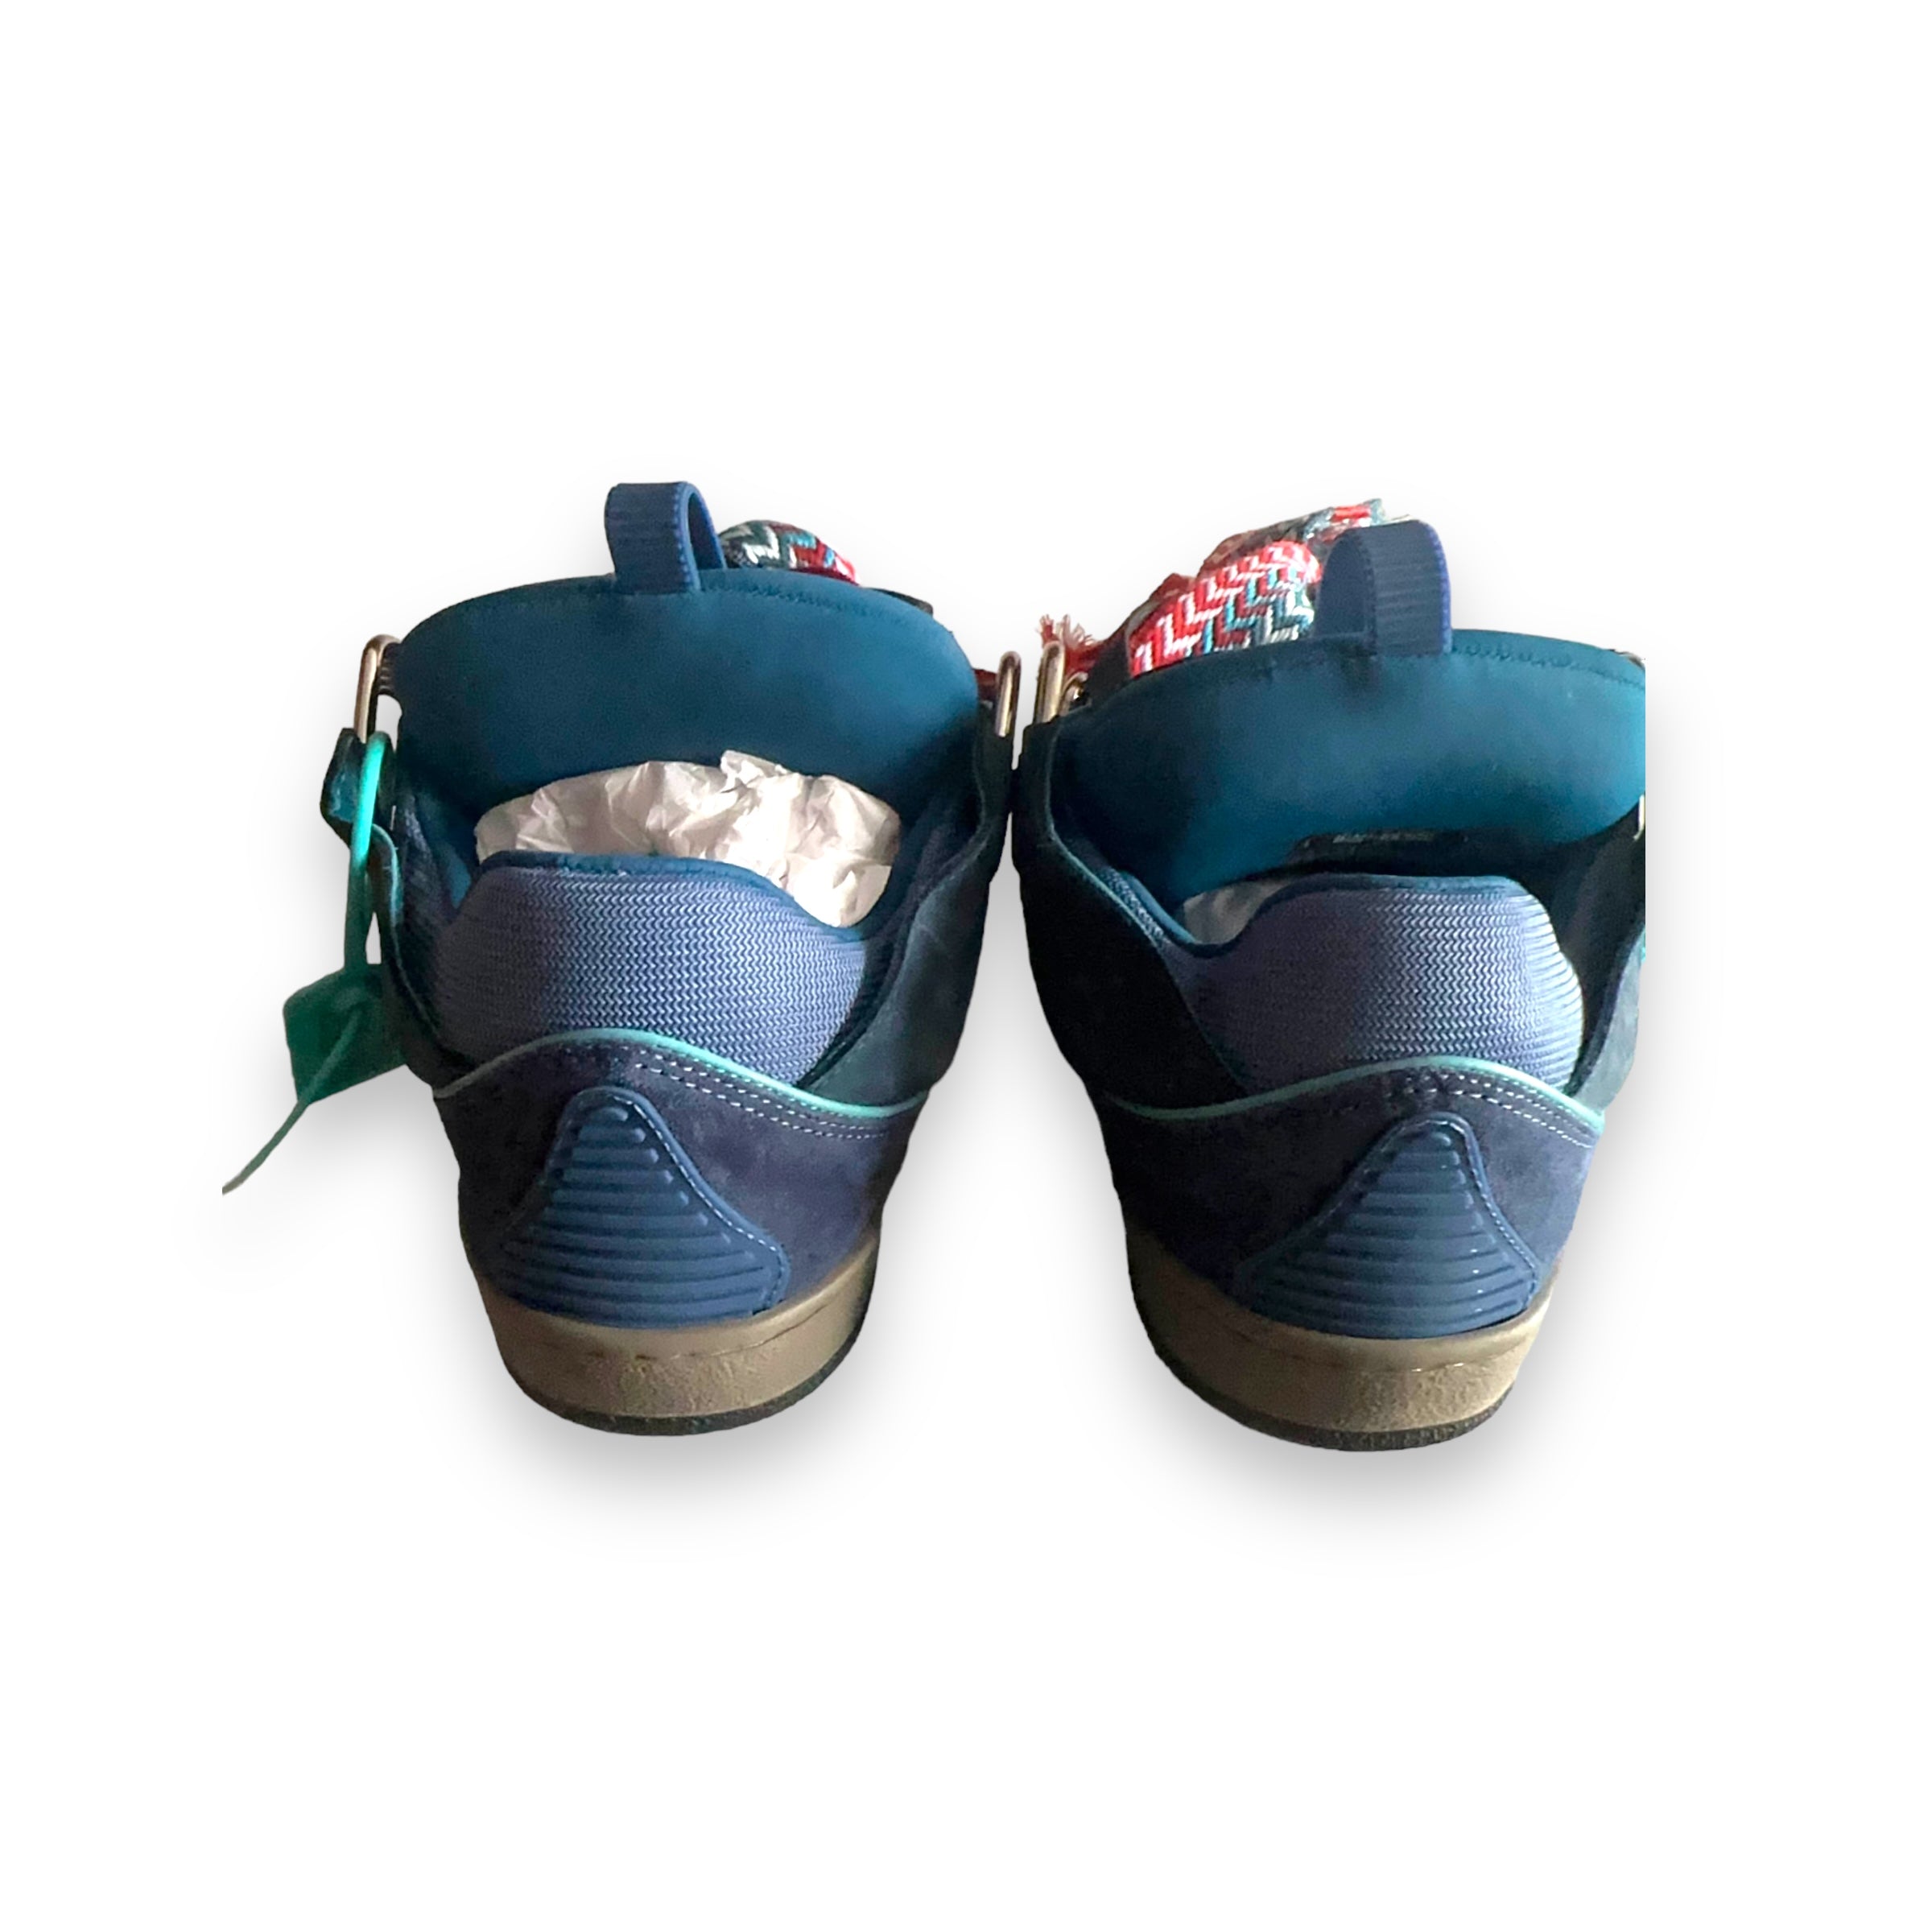 Lanvin Curb Taurus Blue Sneakers